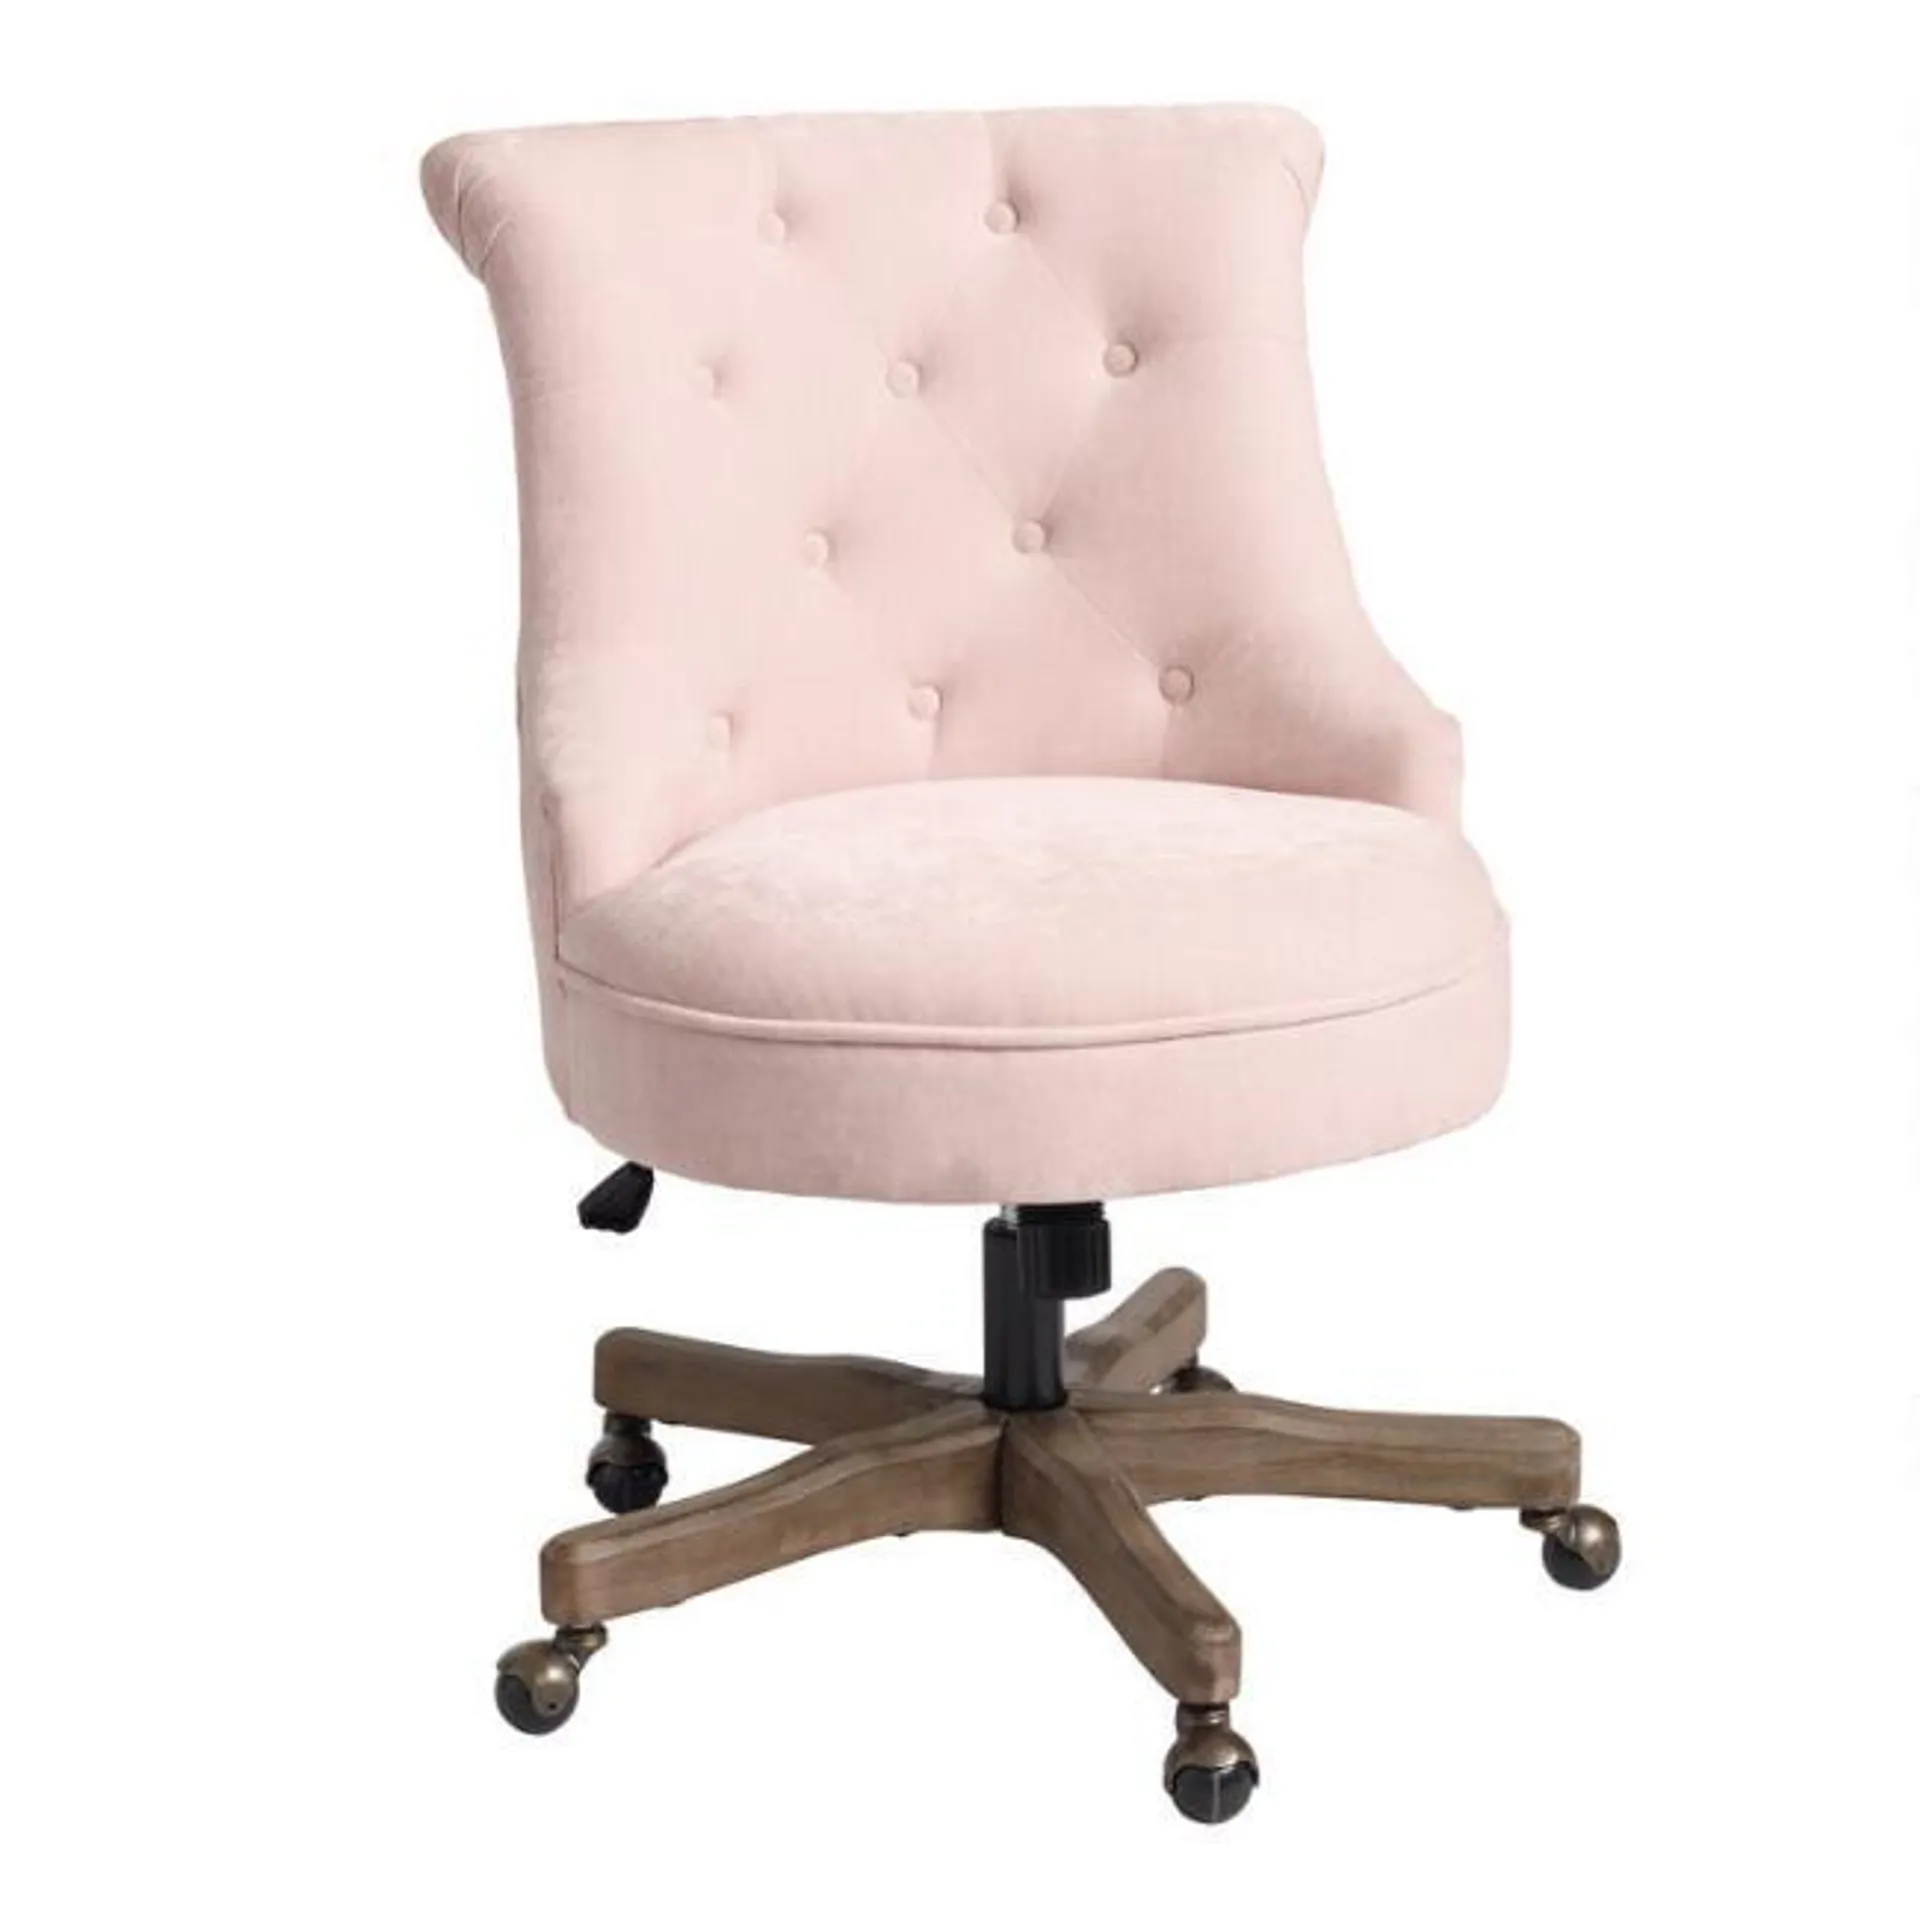 Elsie Tufted Upholstered Office Chair